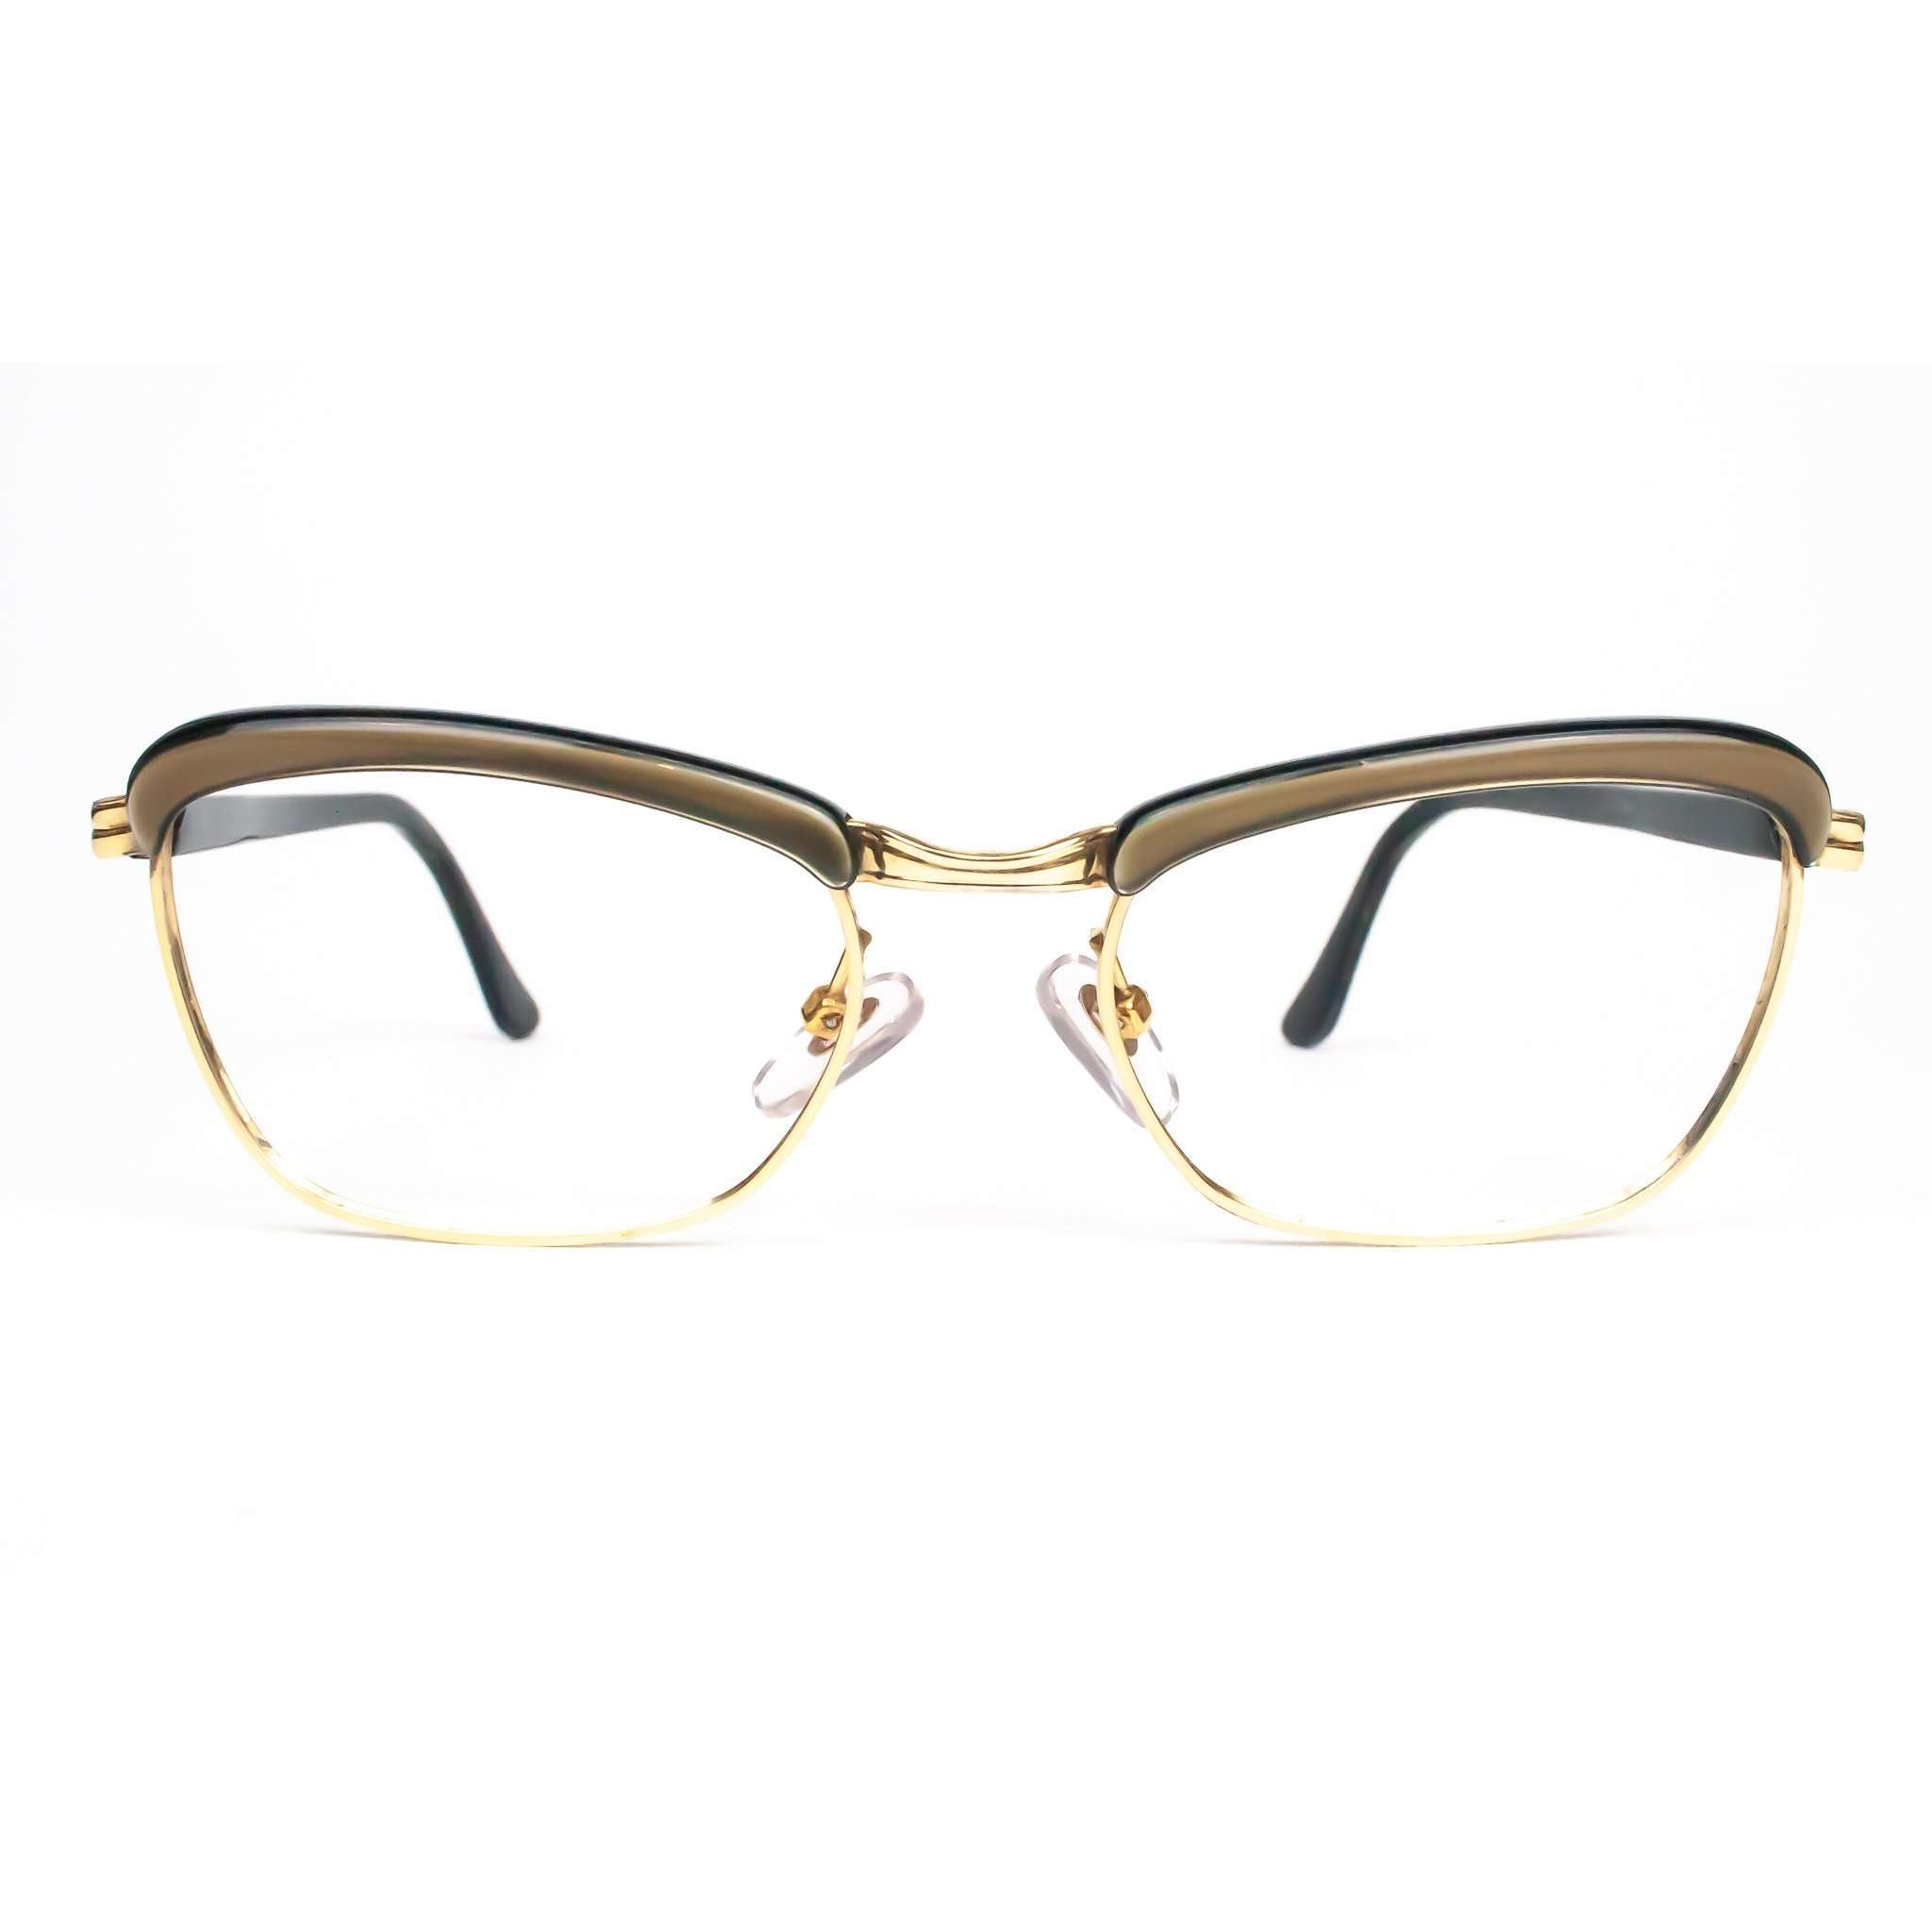 Beatrix 1960's Rectangular Glasses